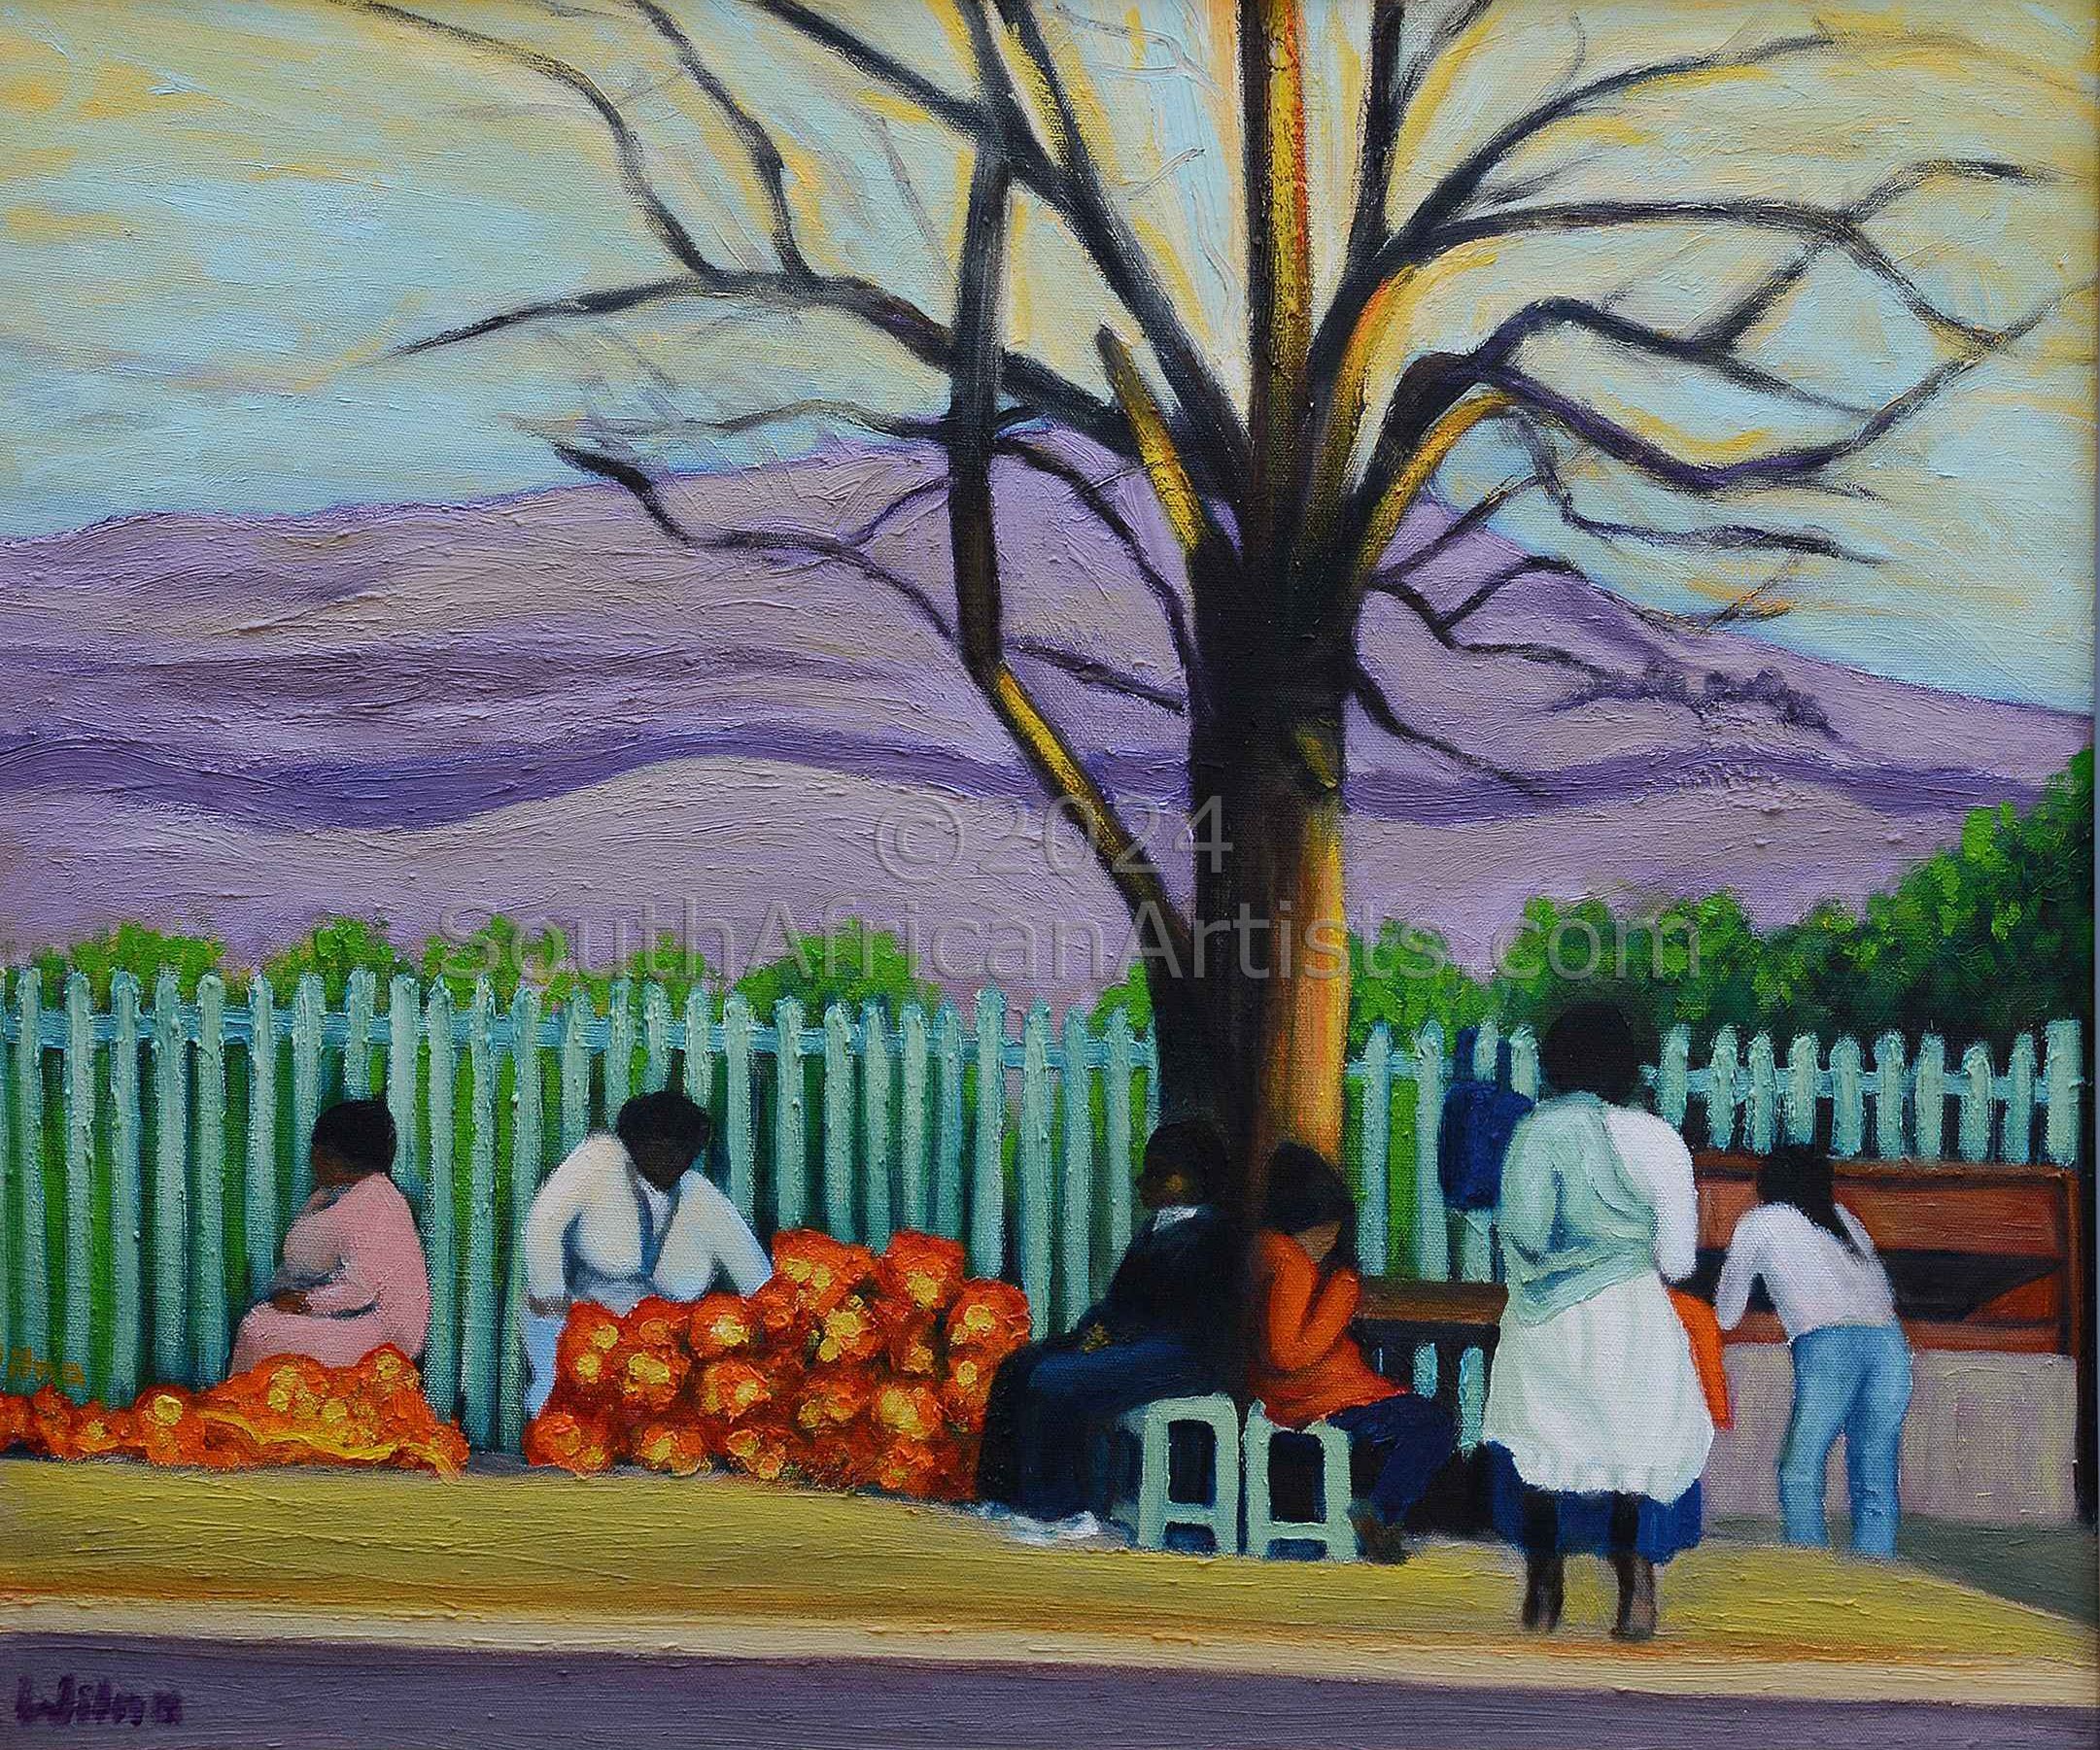 The Orange Sellers